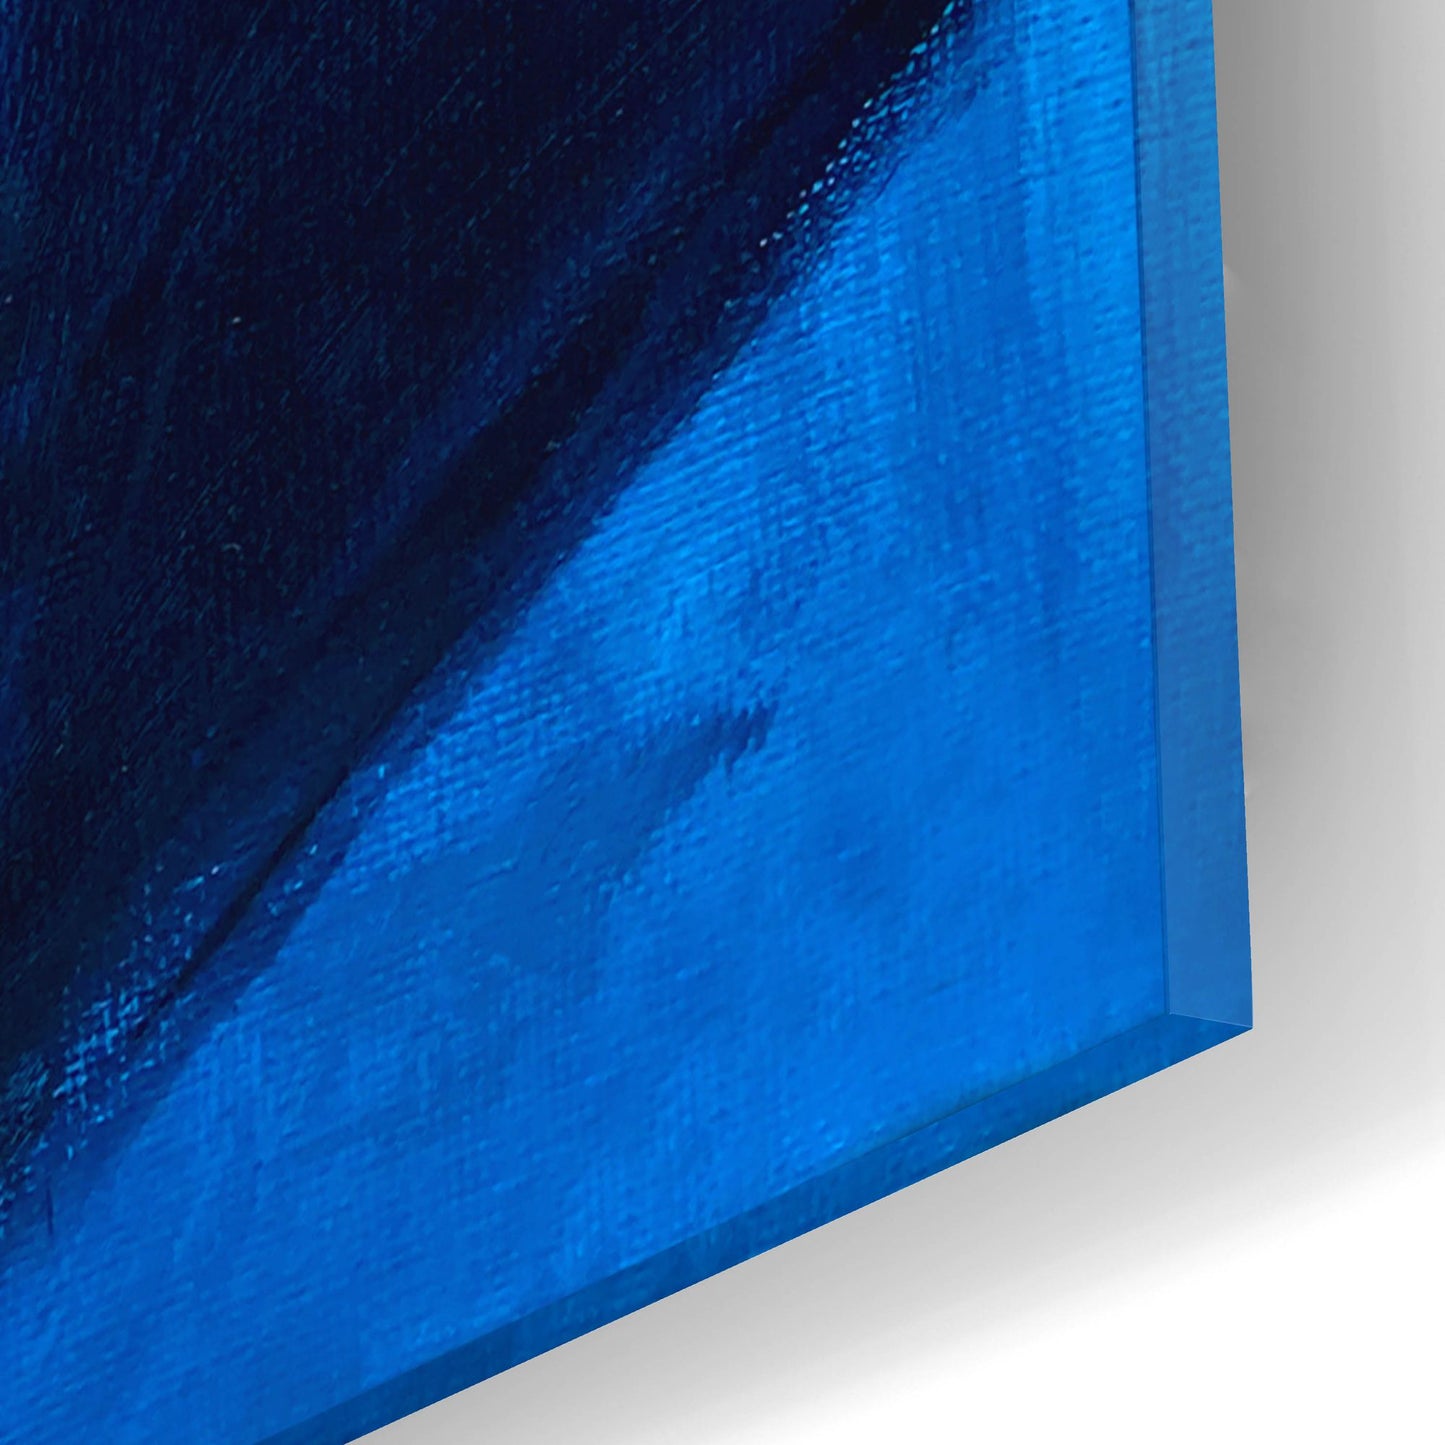 Epic Art 'Schnauzer in blue' by Dawg Painter, Acrylic Glass Wall Art,12x16